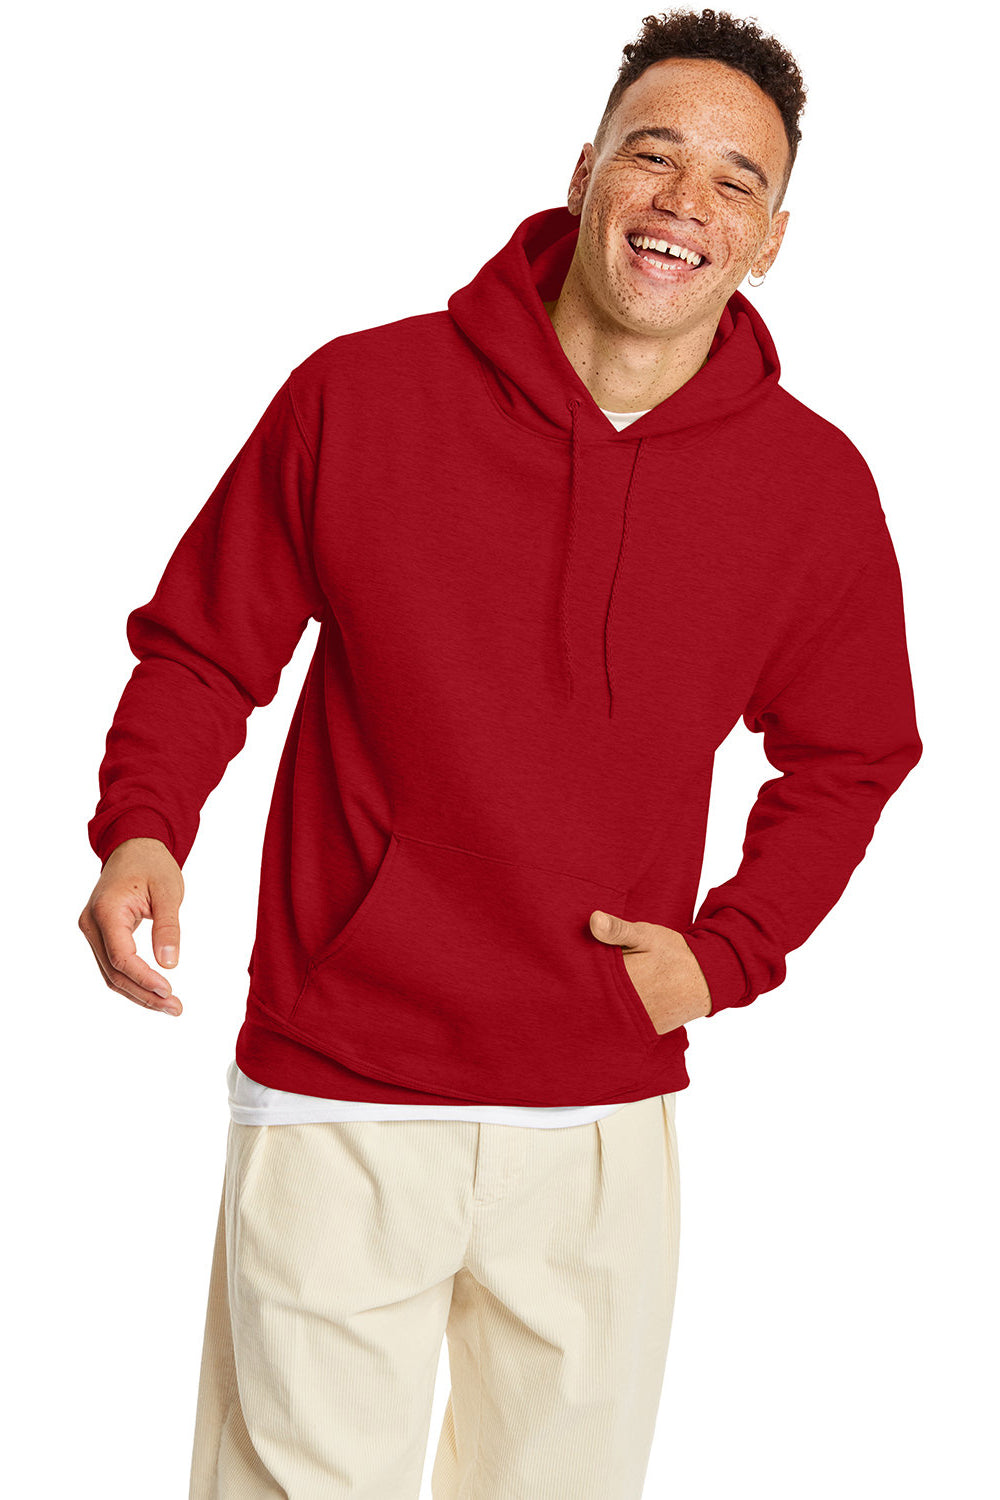 Hanes P170 Mens EcoSmart Print Pro XP Hooded Sweatshirt Hoodie Heather Pepper Red Front